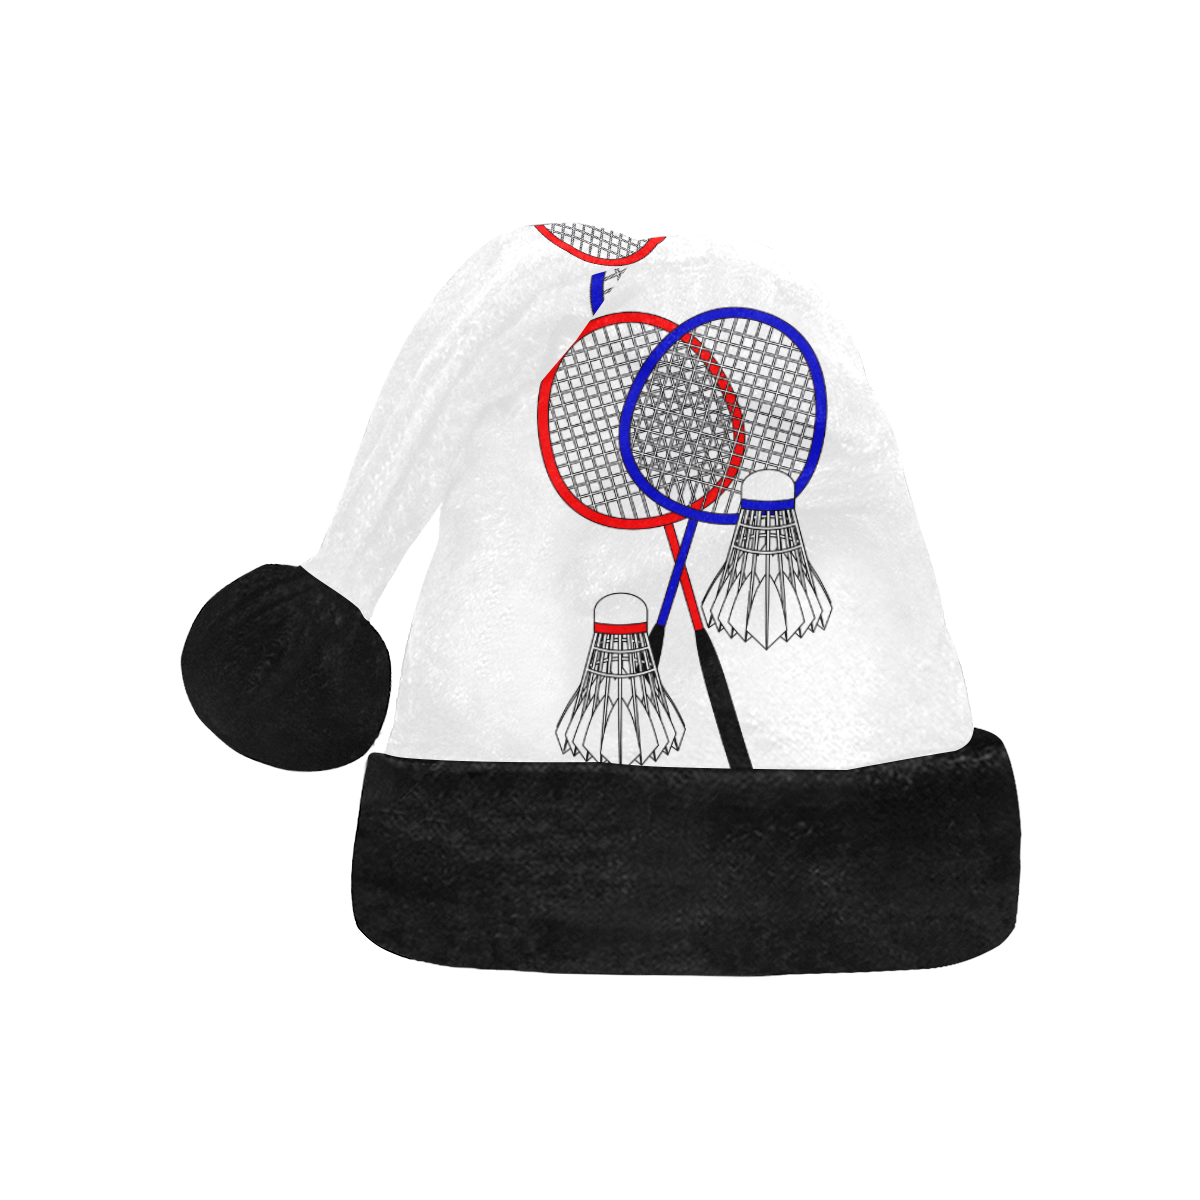 Badminton Rackets and Shuttlecocks Black and White Santa Hat